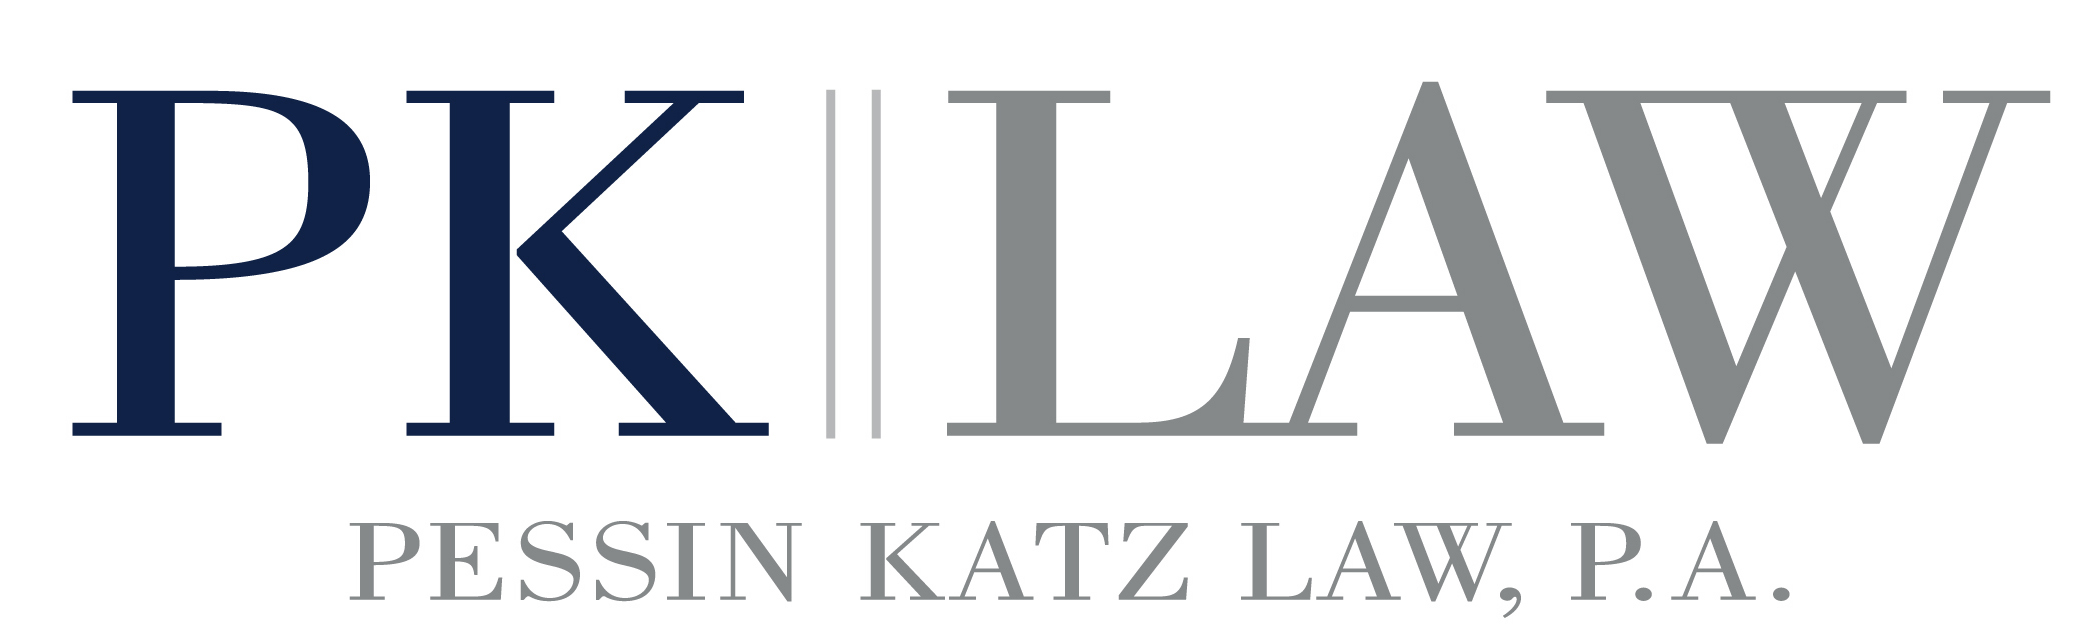 PKLAW2C Logo_Print